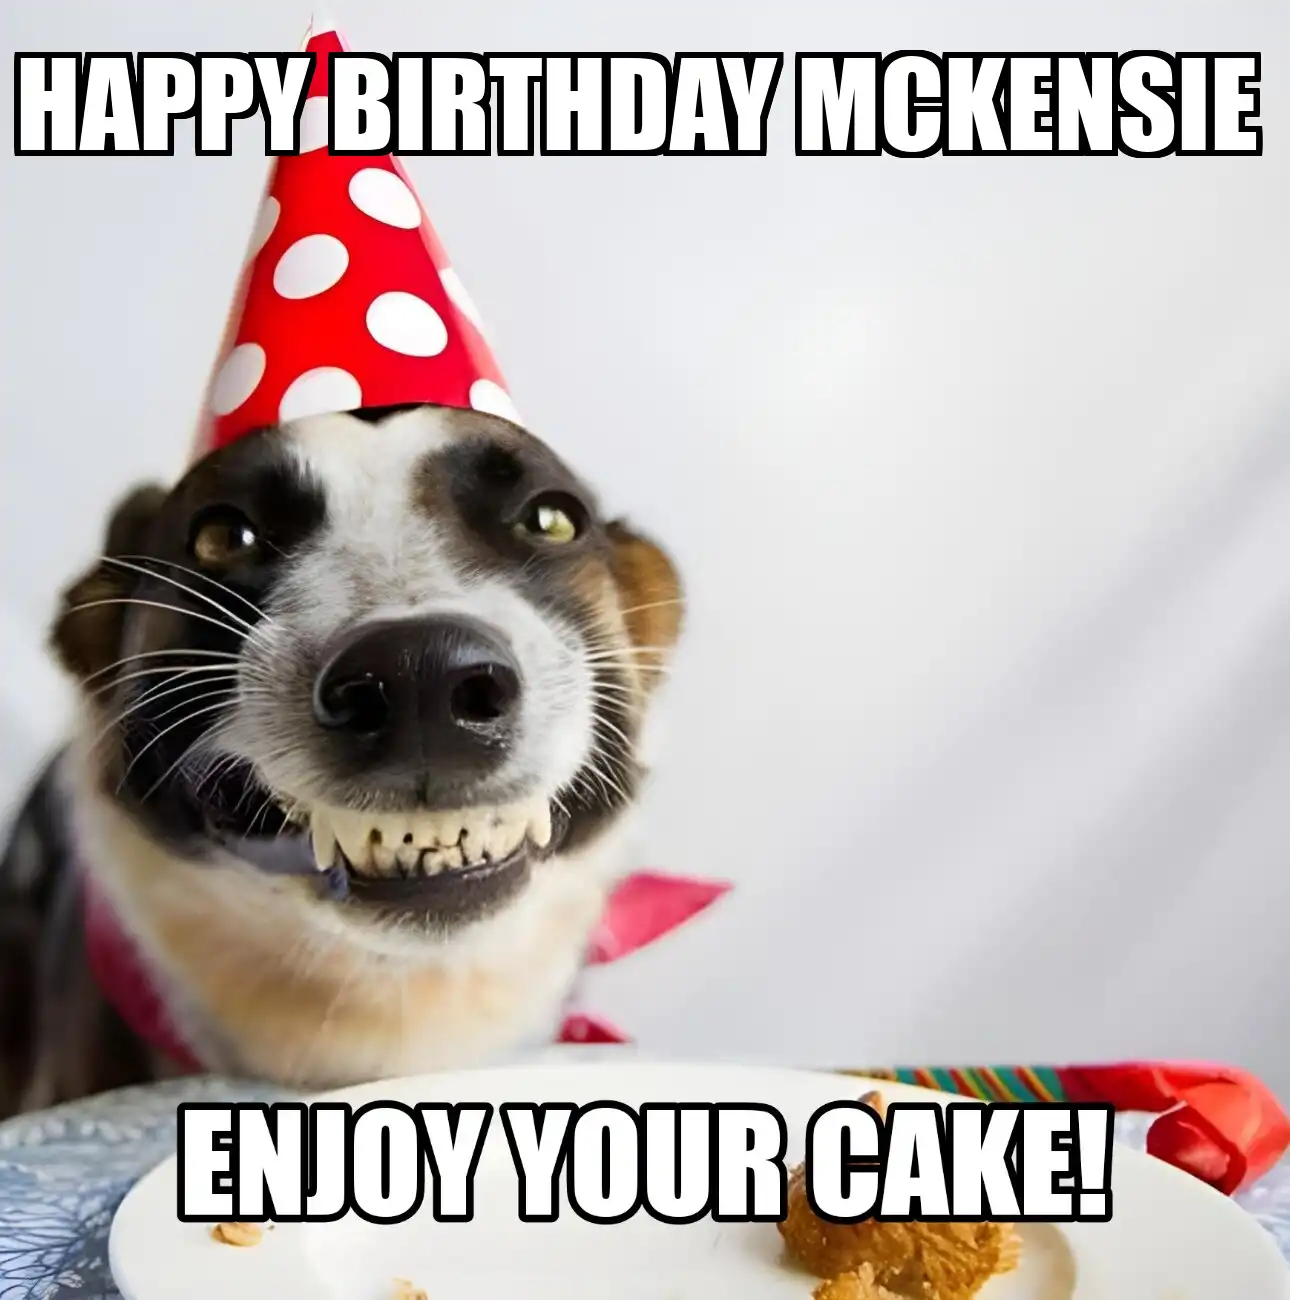 Happy Birthday Mckensie Enjoy Your Cake Dog Meme